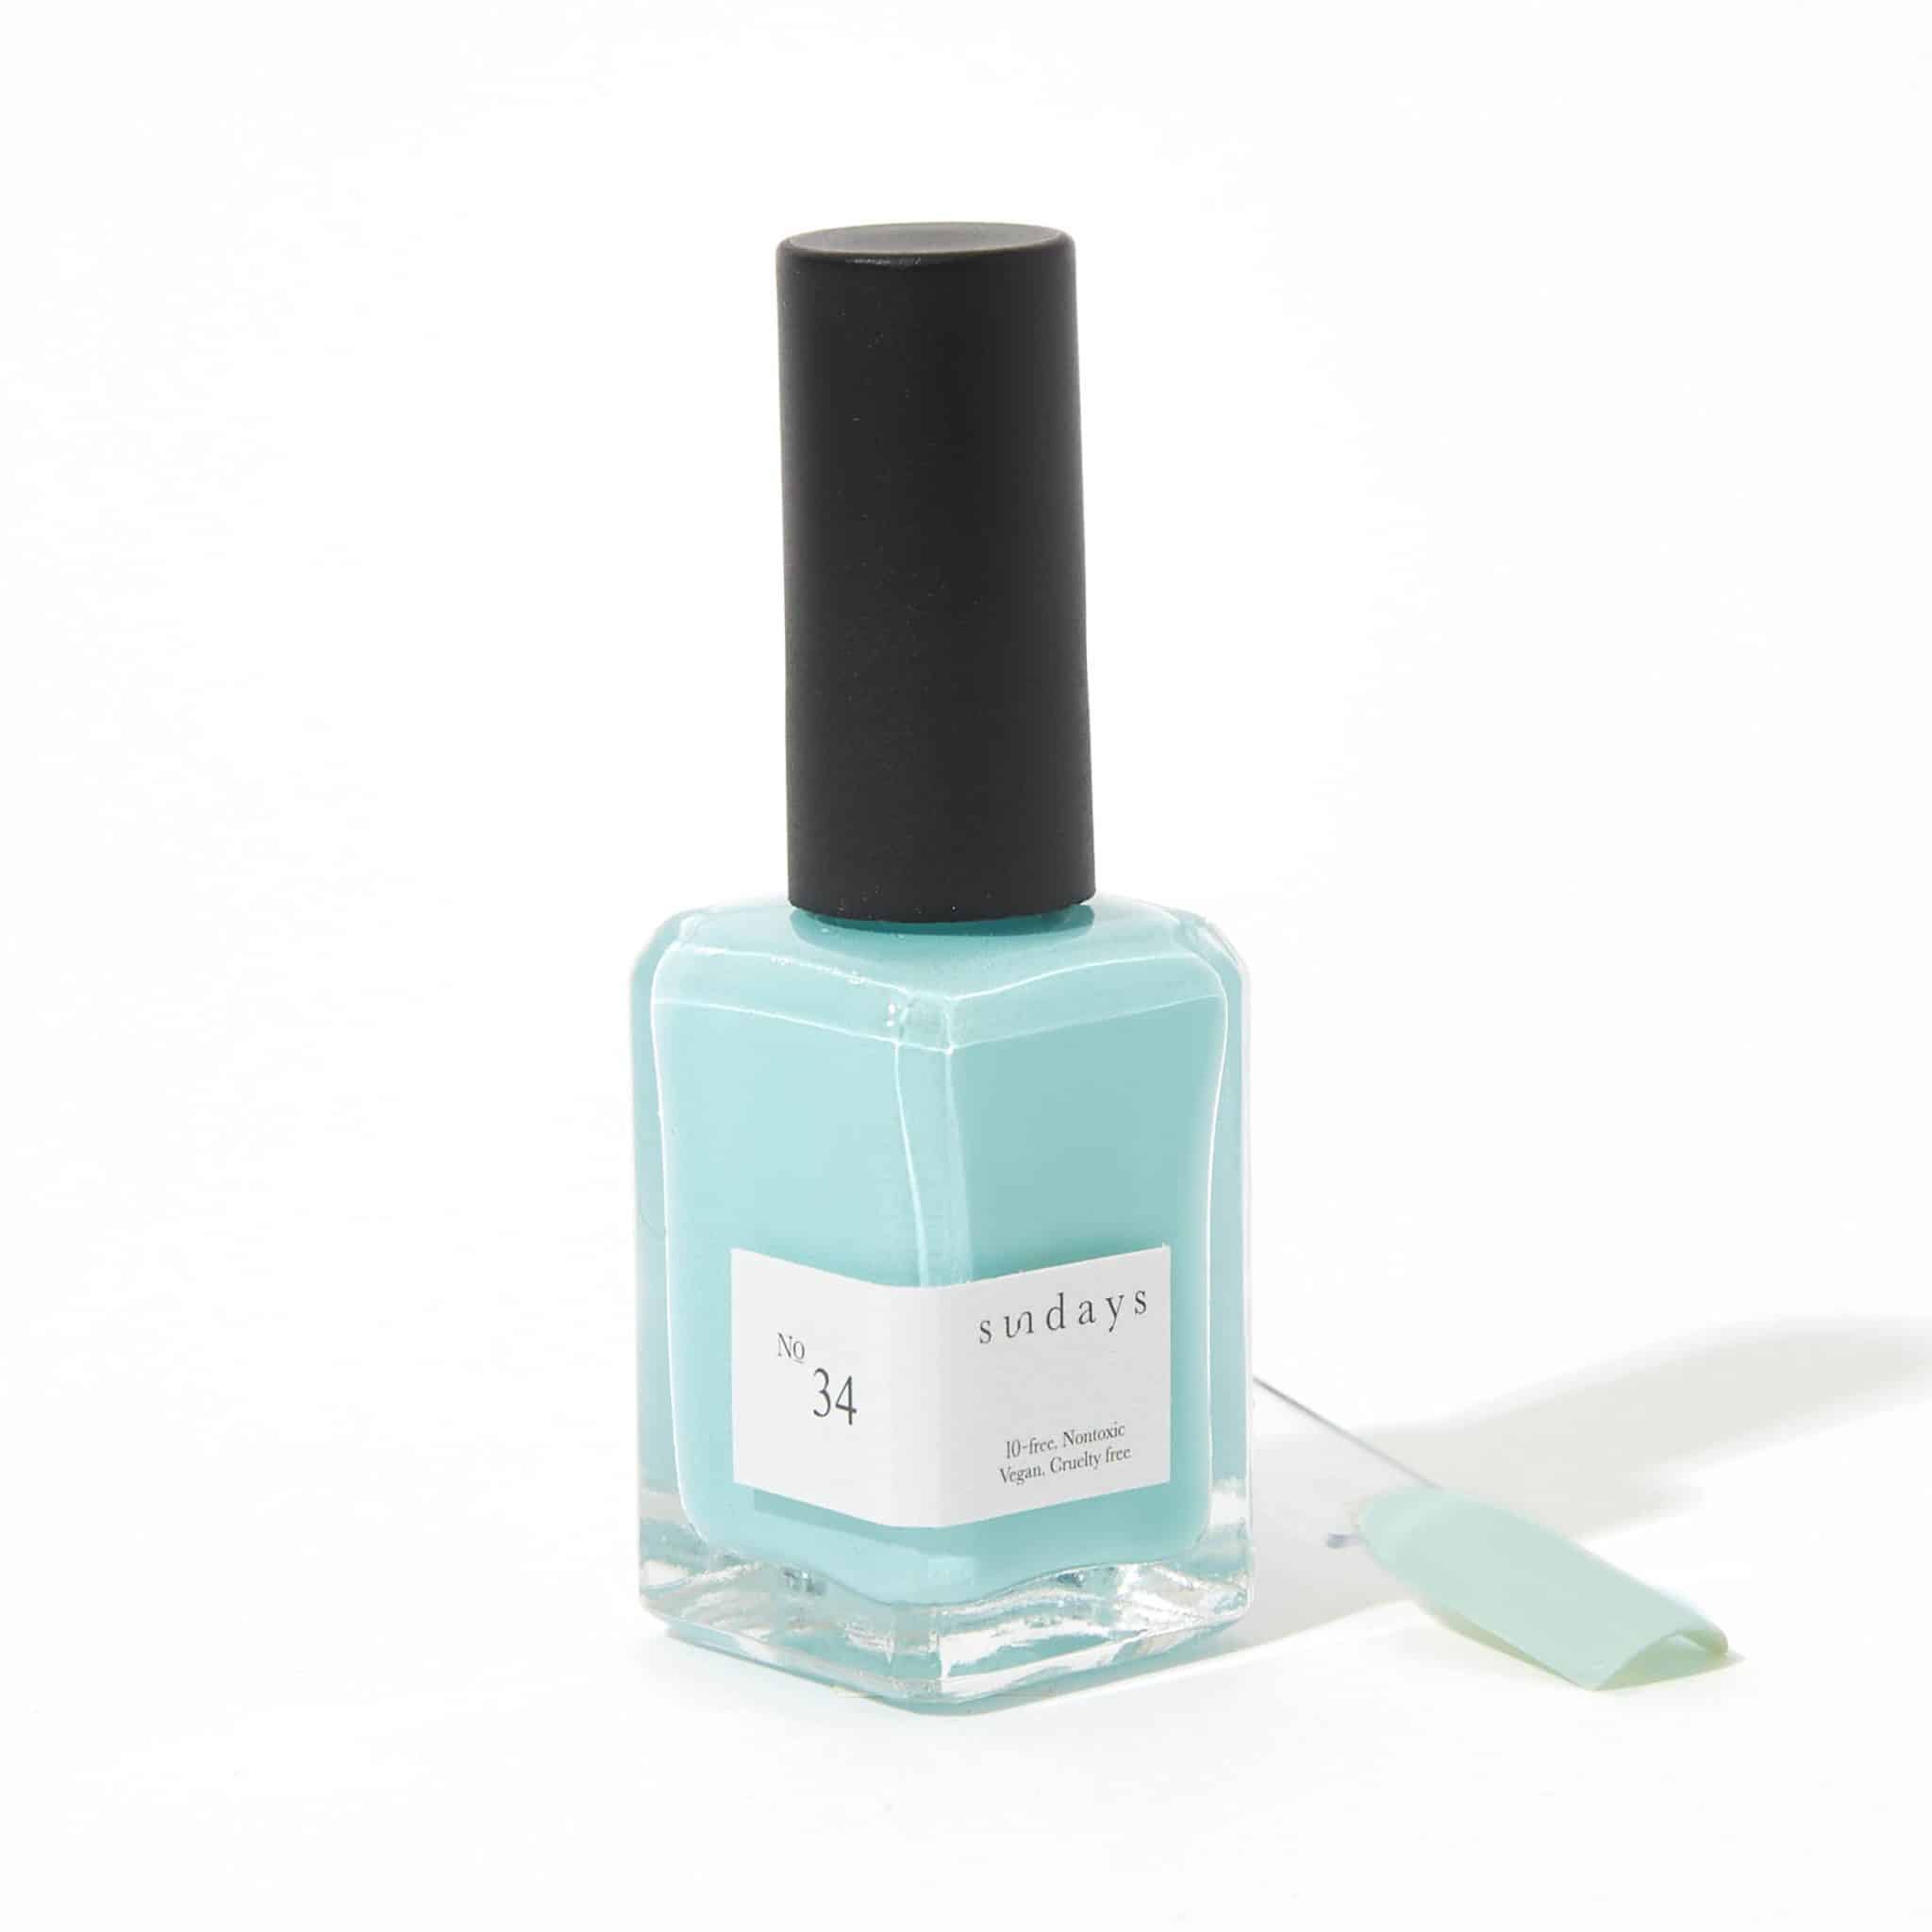 Non-toxic nail polish in eggshell turquoise